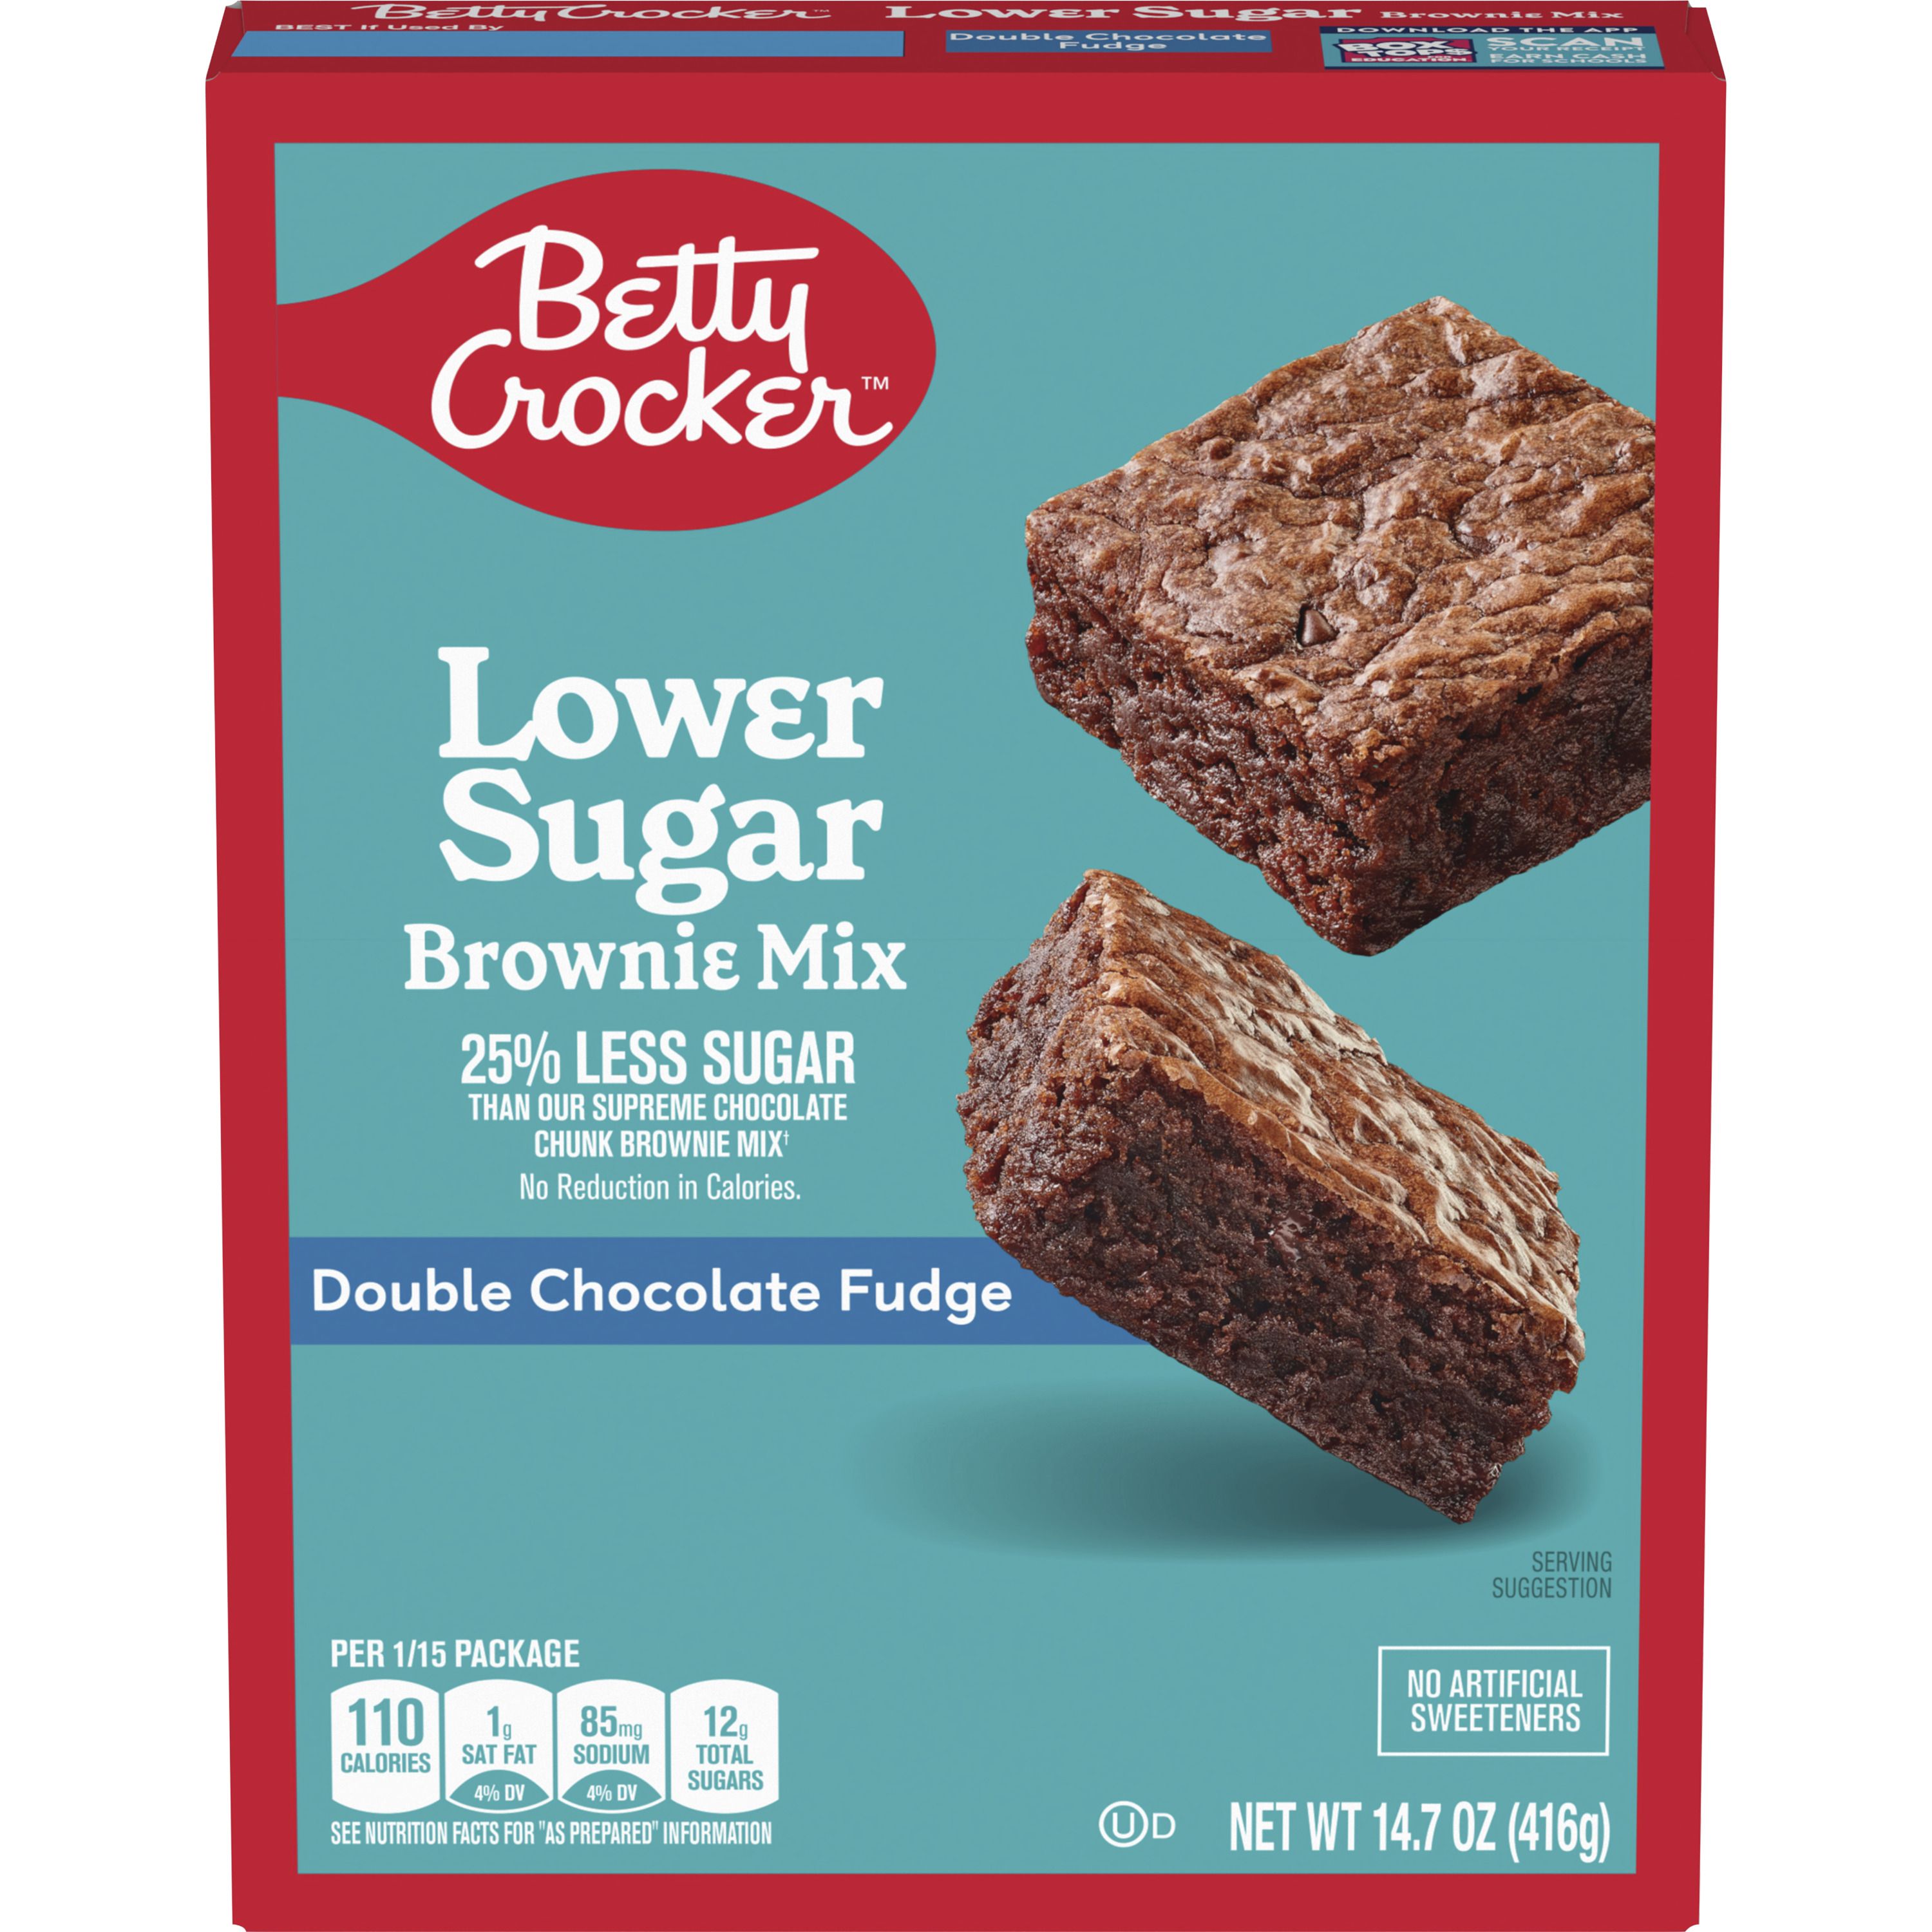 Betty Crocker Lower Sugar Brownie Mix, Double Chocolate Fudge, No Artificial Sweeteners, 14.7 oz - Front